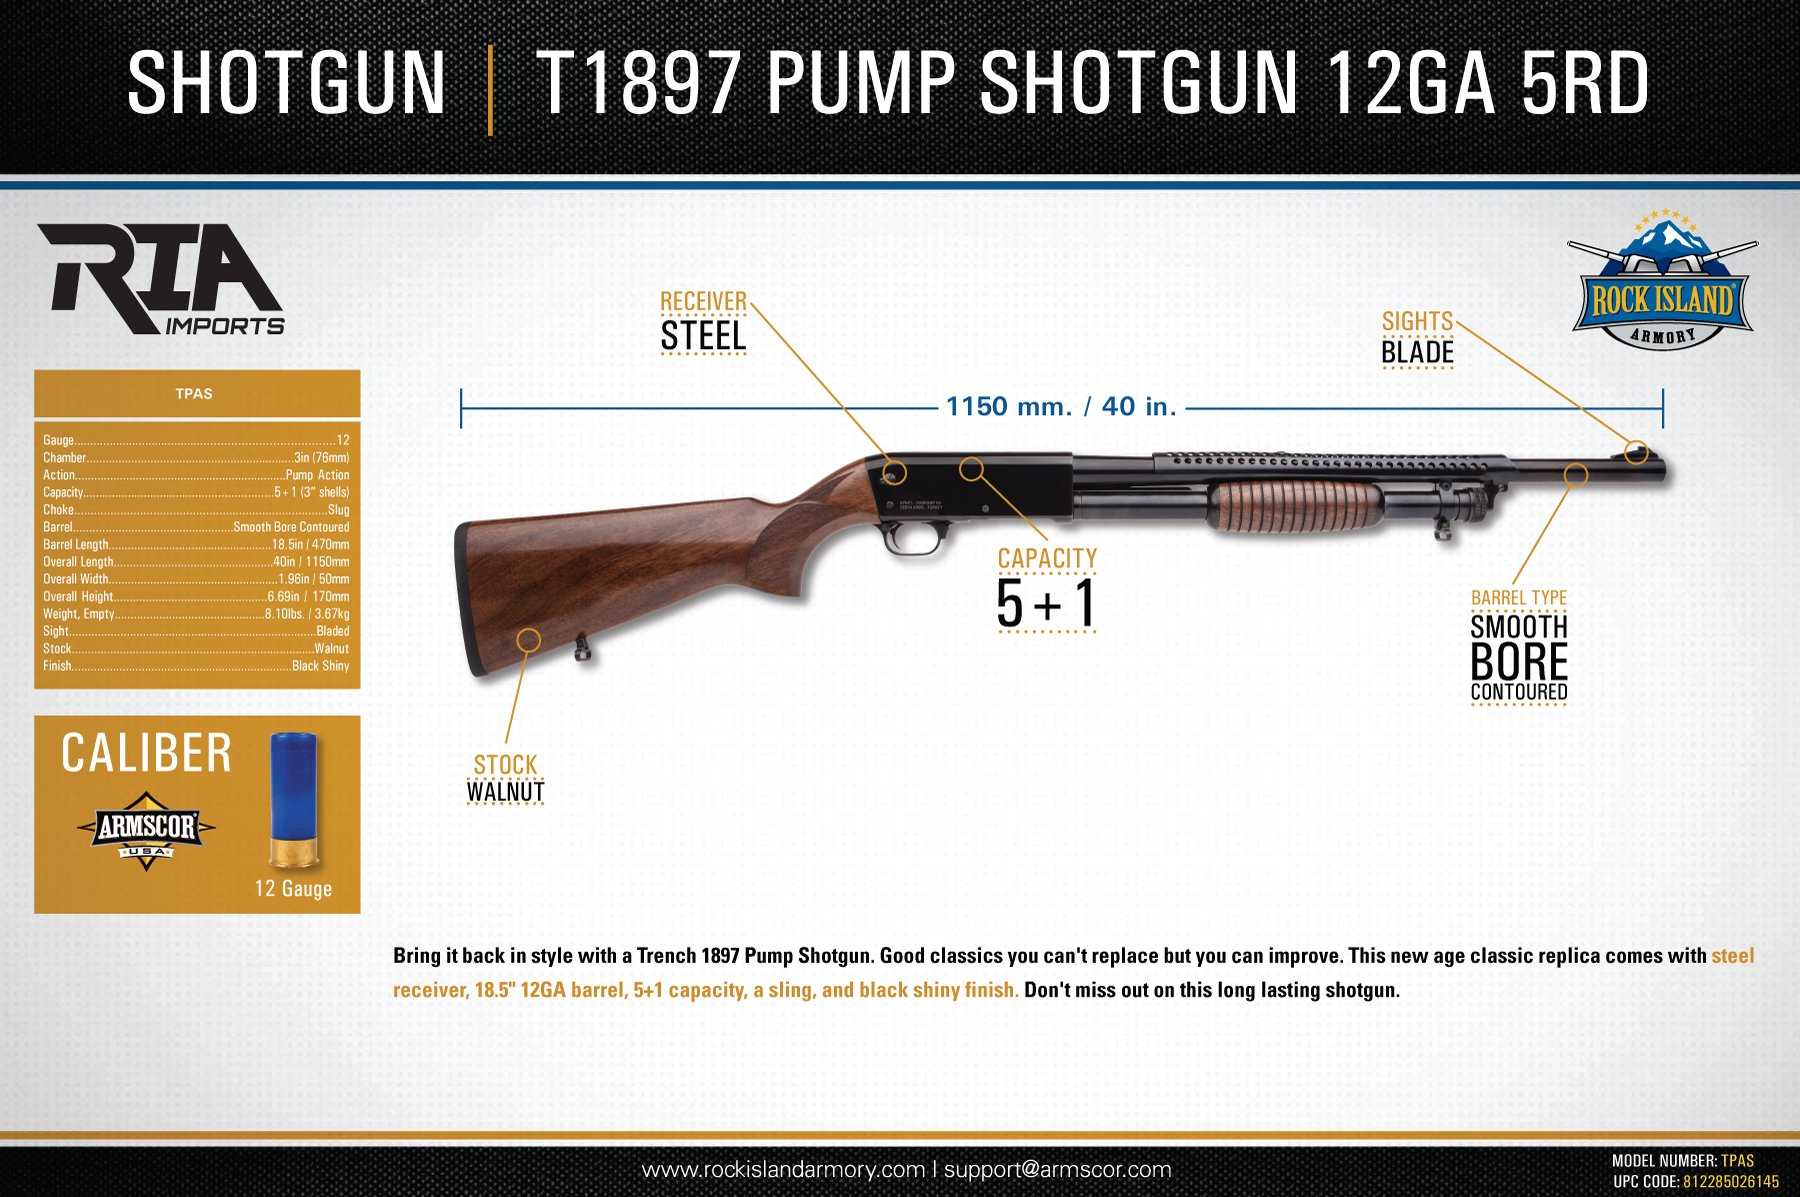 Tpas Pump Shotgun 12ga 5rd 5642